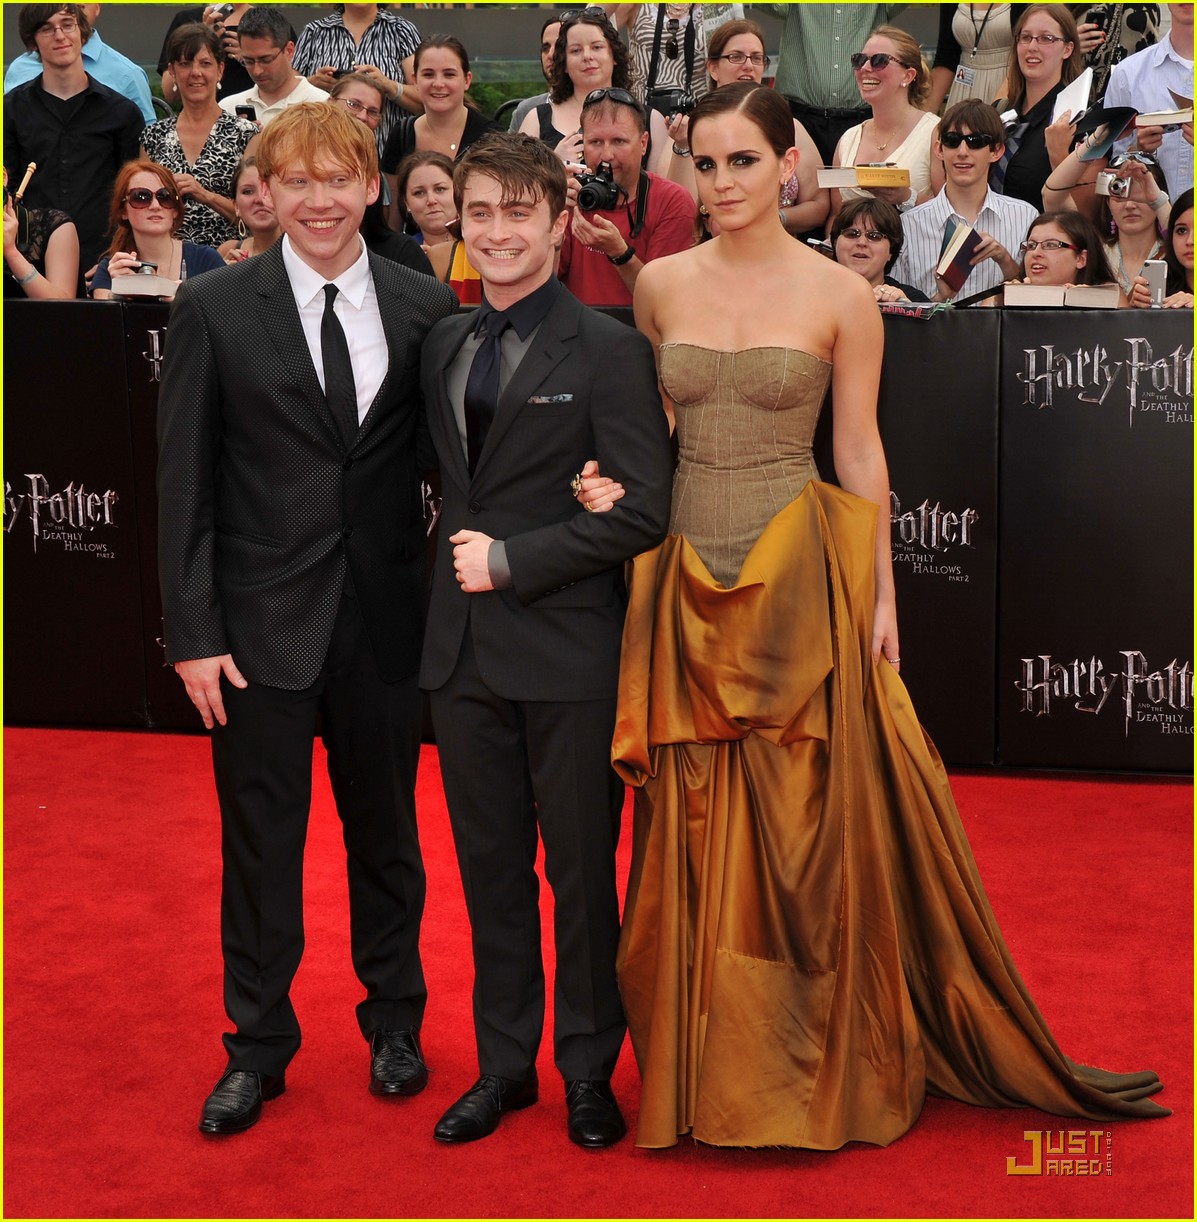 Daniel Radcliffe And Emma Watson Love